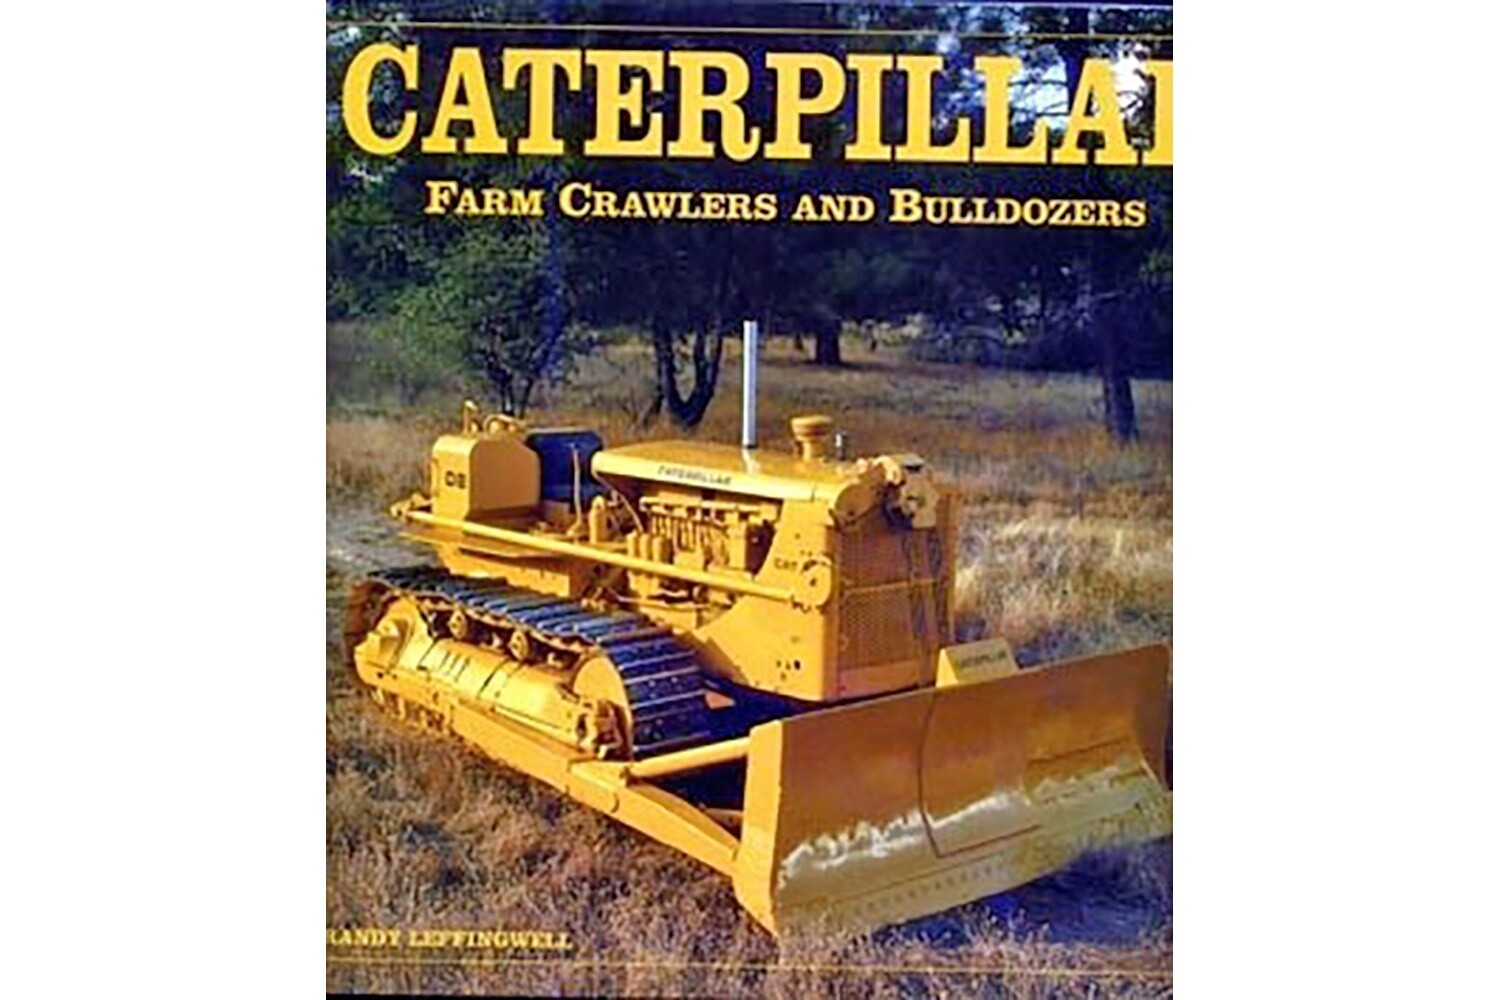 Caterpillar-Farm Crawlers/Dozers